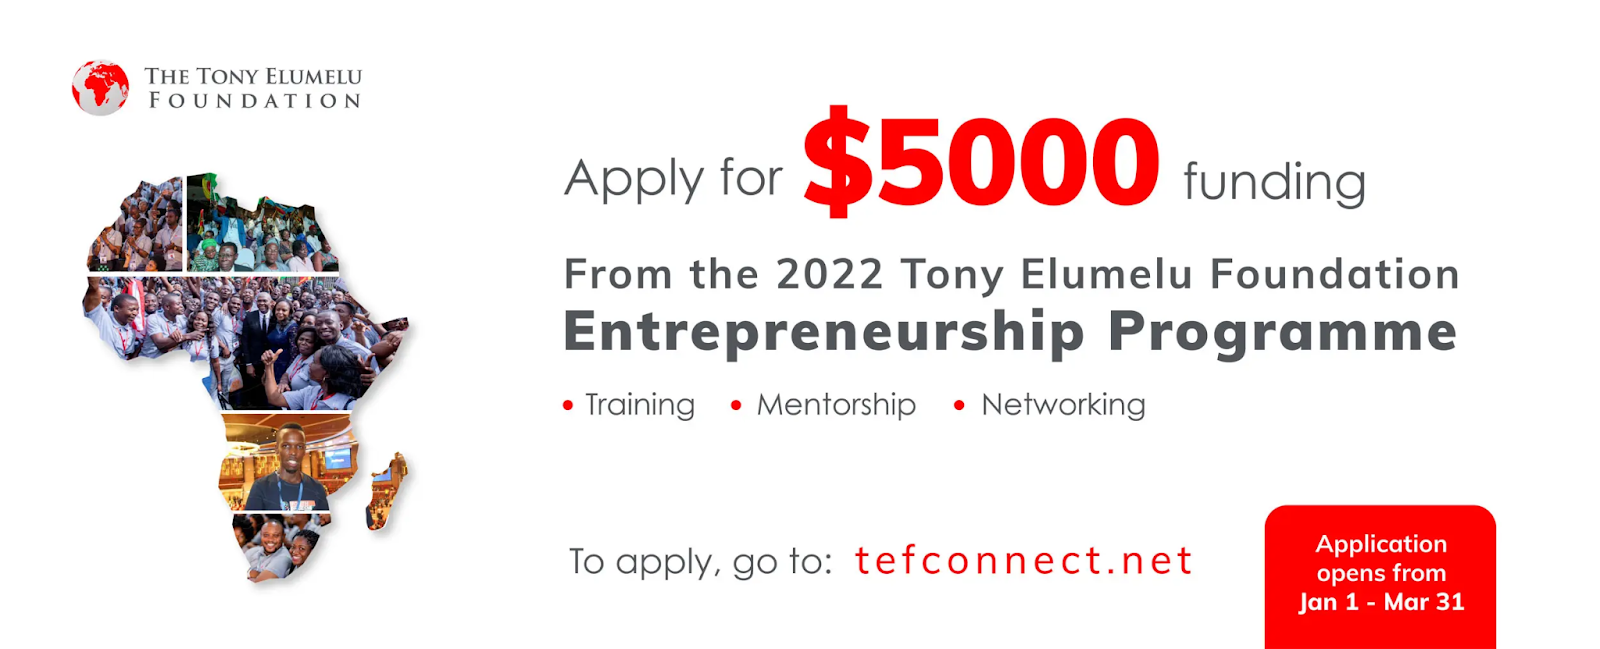 Tony Elumelu Foundation offers grant funding opportunities for agribusiness entrepreneurs in Nigeria